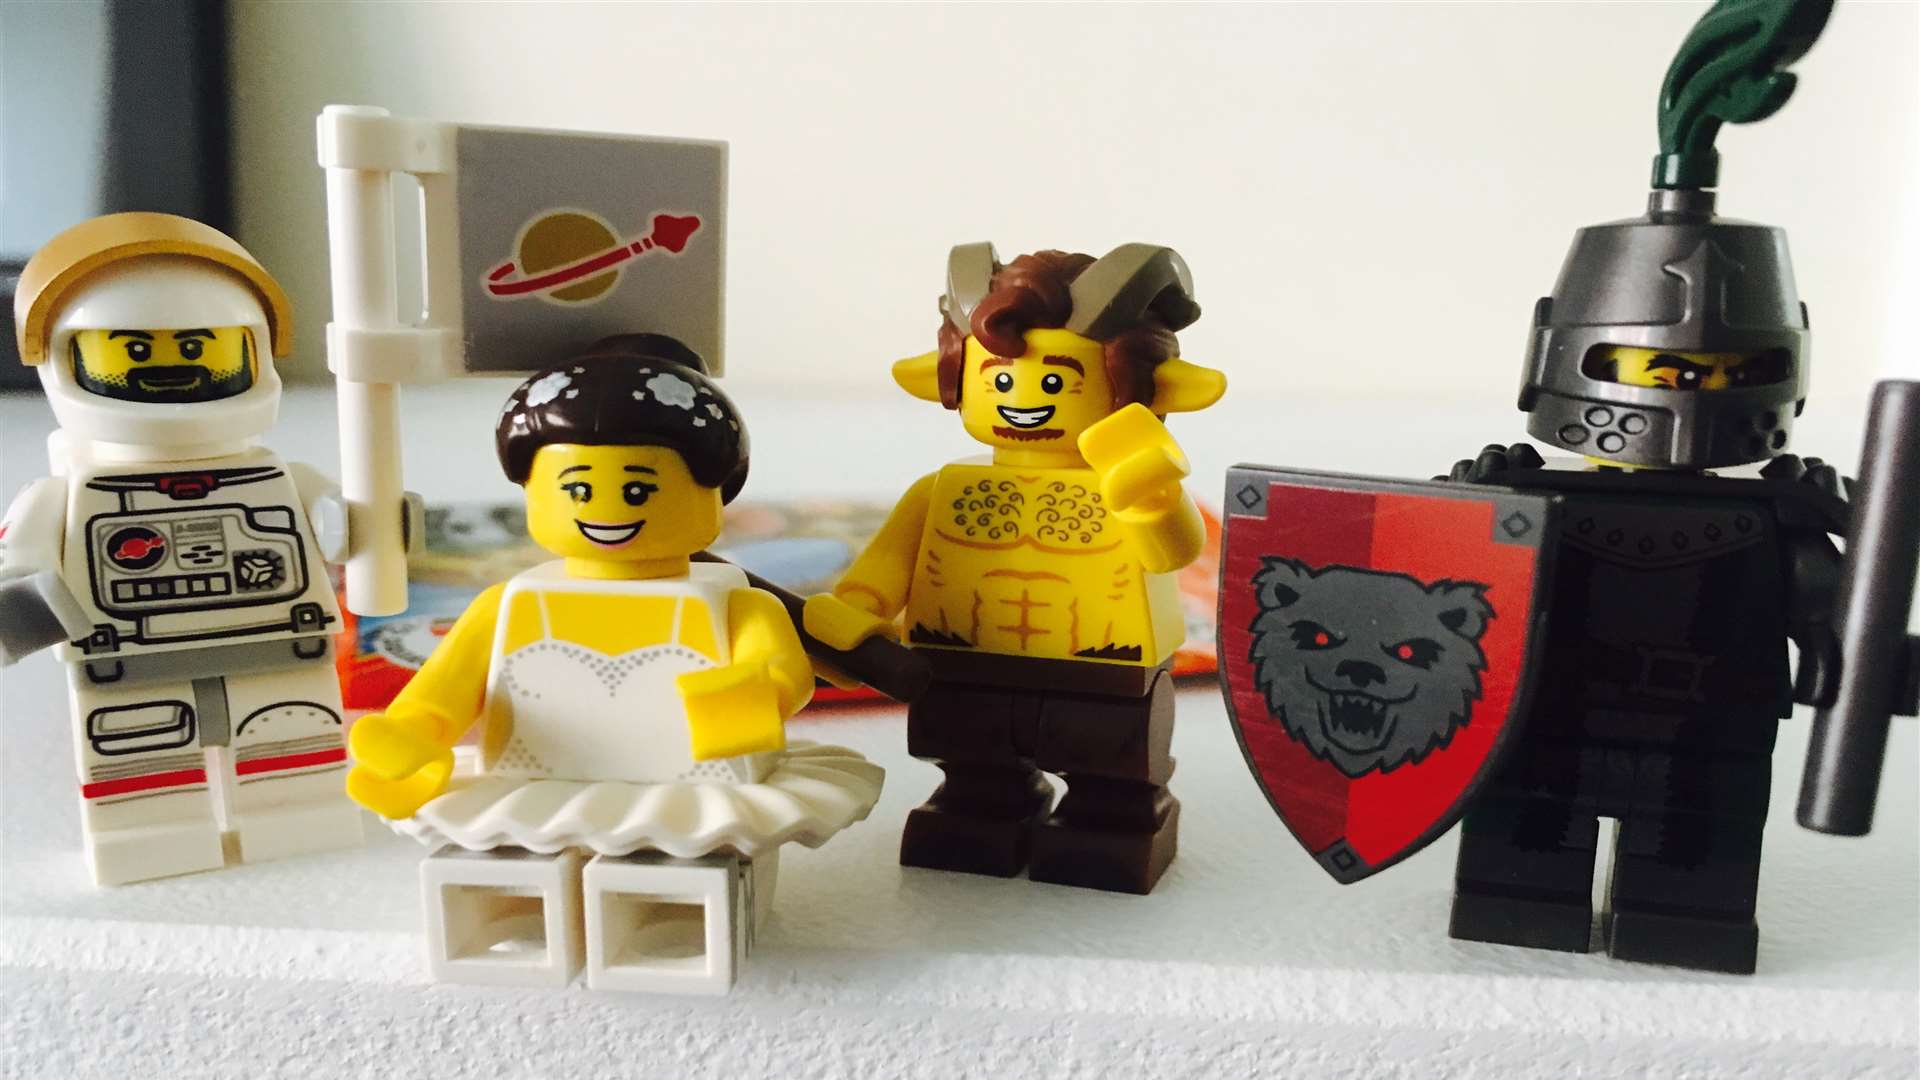 Are LEGO minifigures the latest craze?